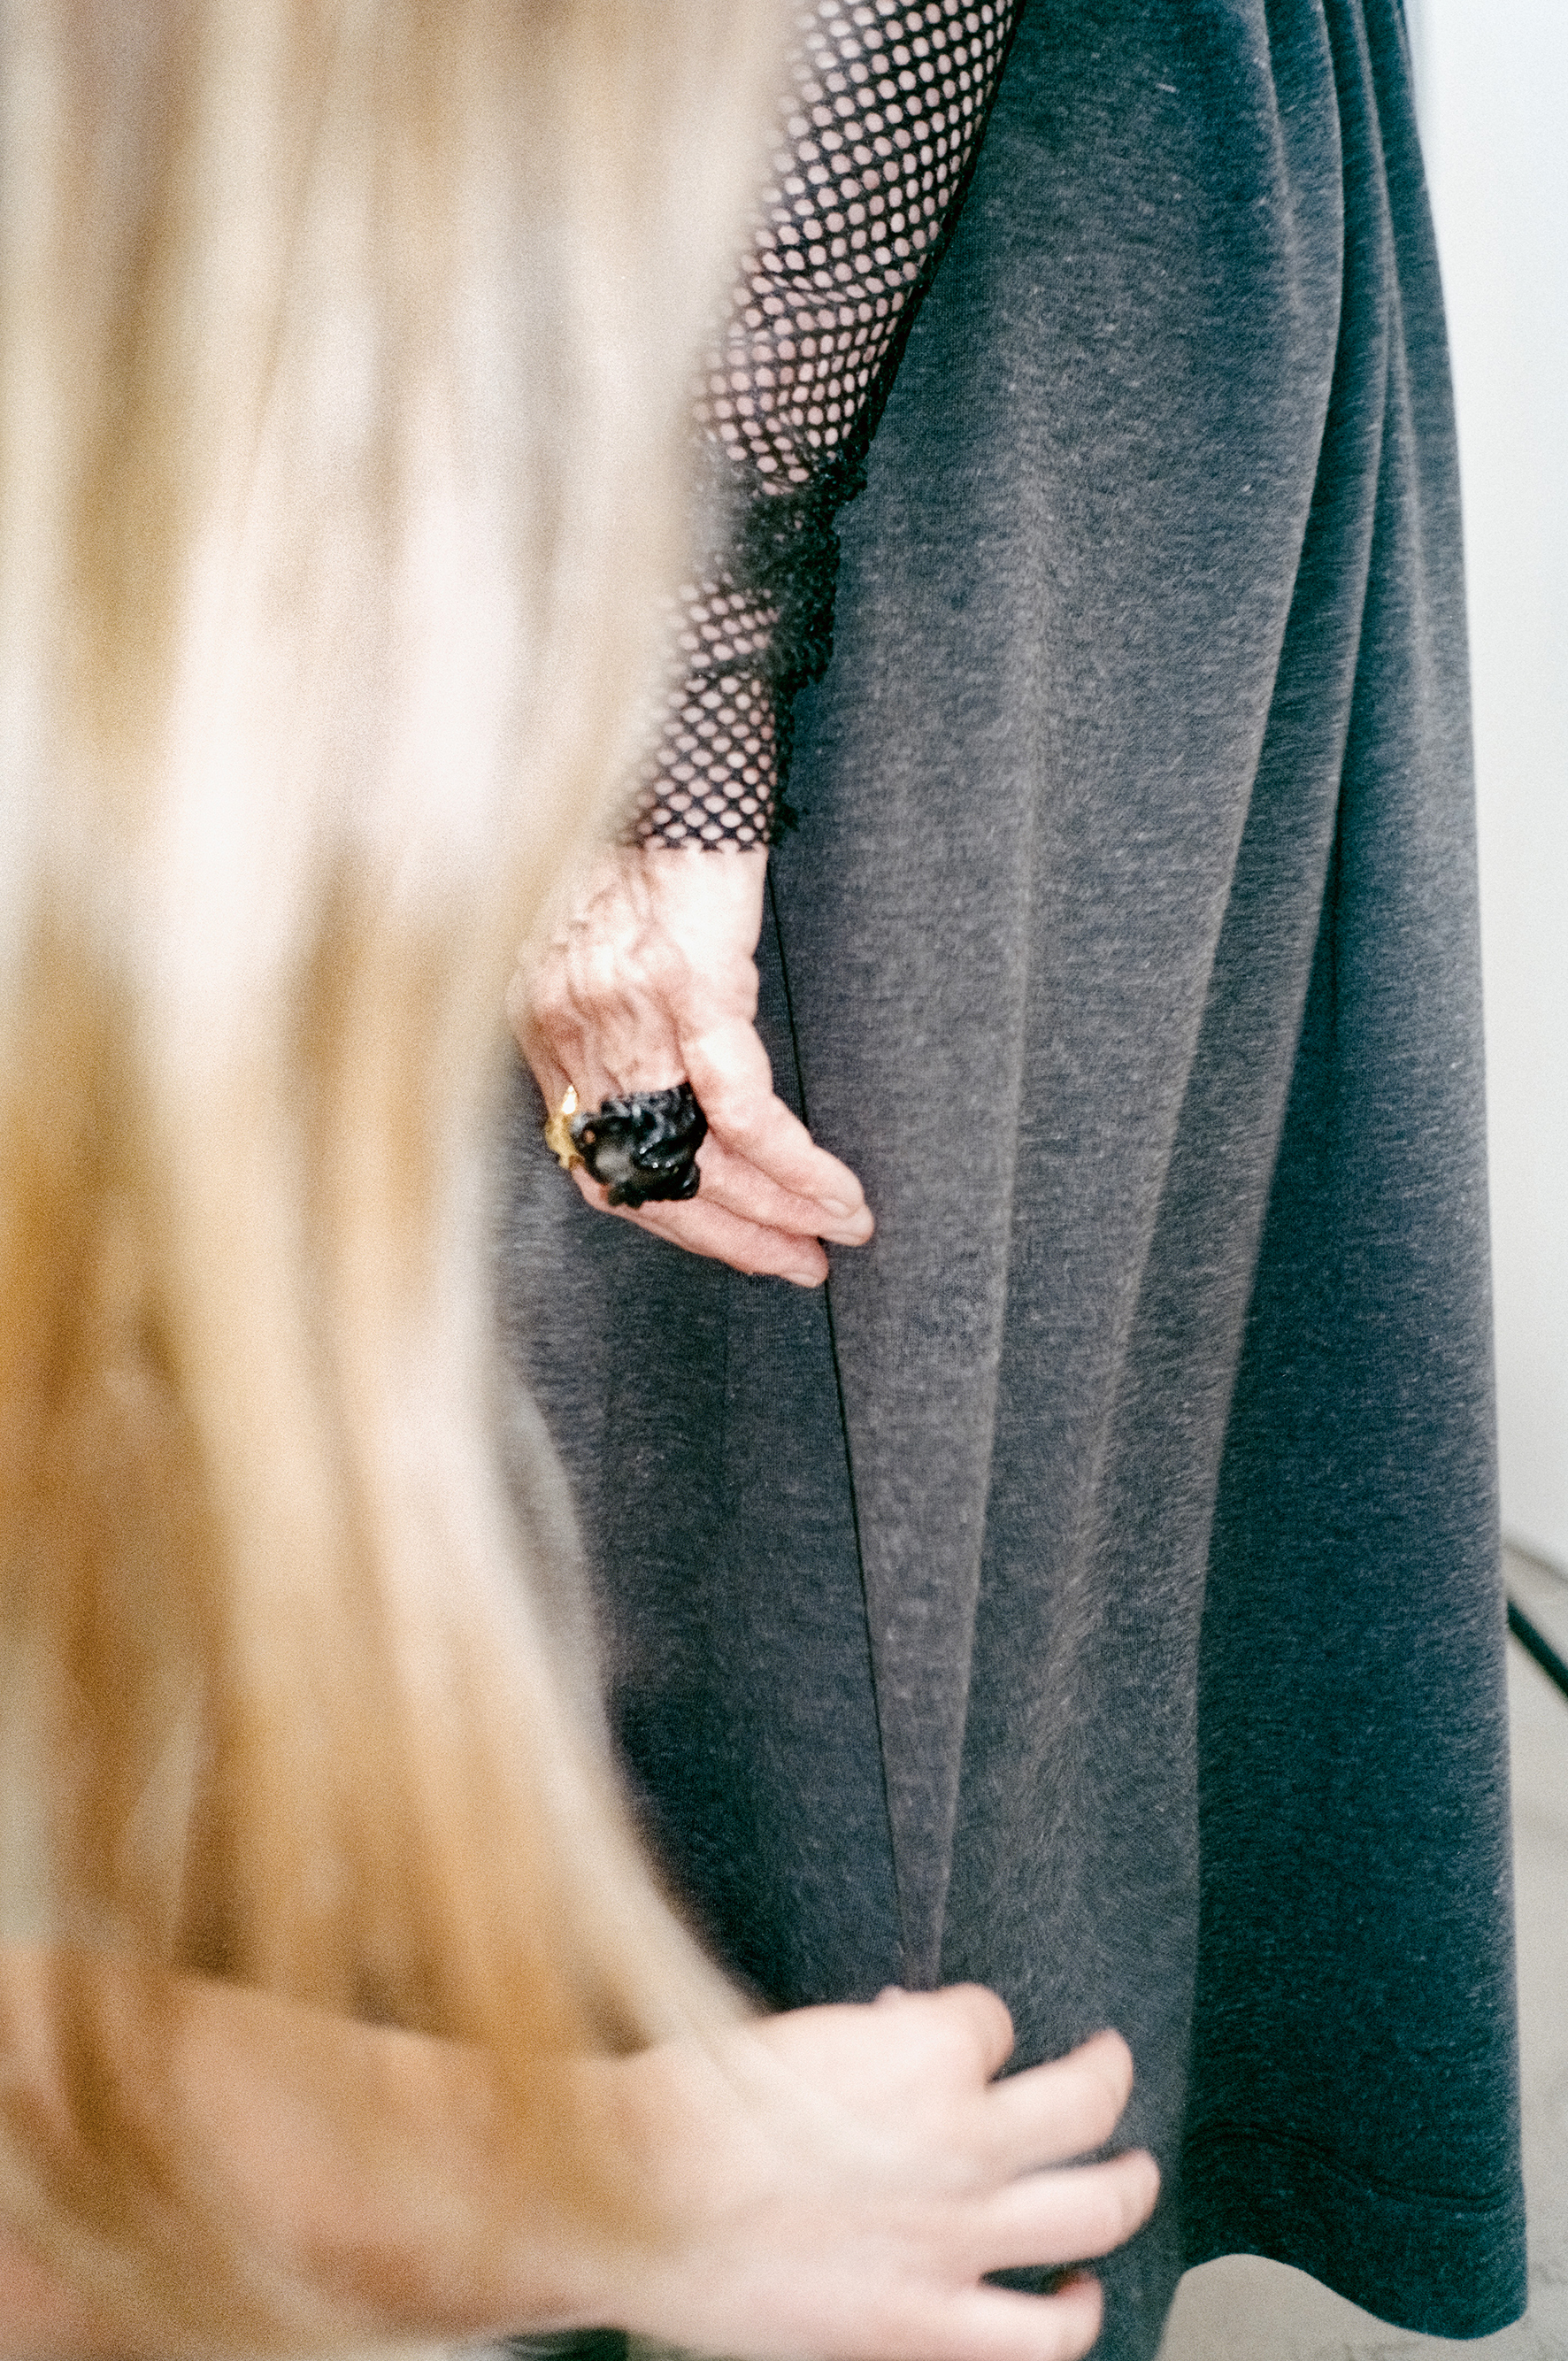  Fishnet turtleneck, grey wool dress, oversize rings. Black tights WOLFORD&nbsp; 